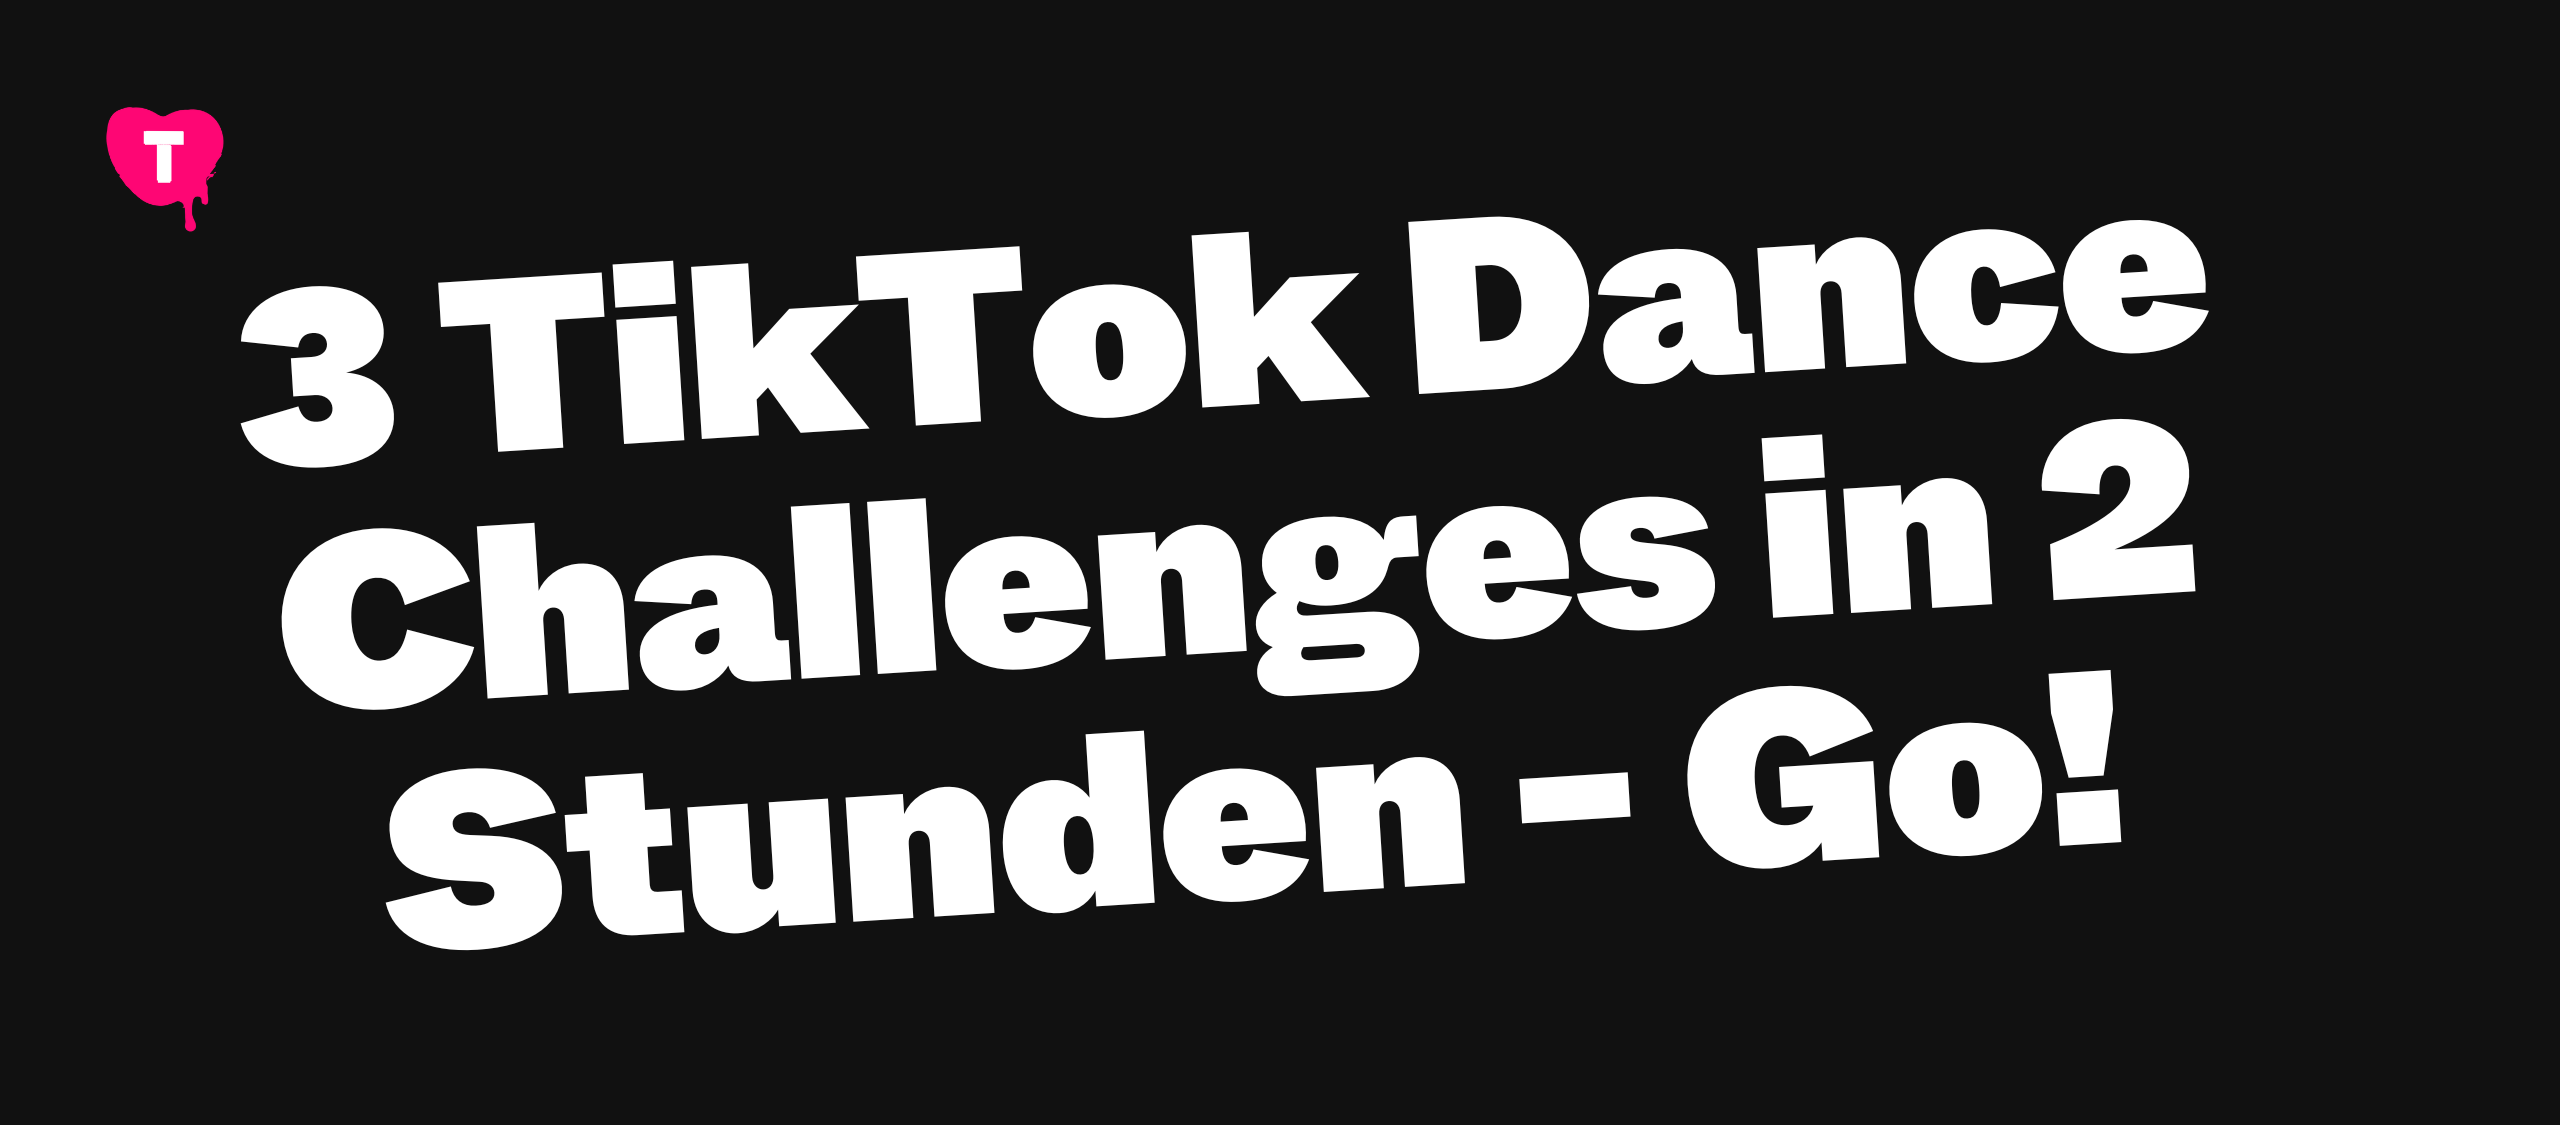 3 TikTok Dance Challenges in 2 Stunden - Go!